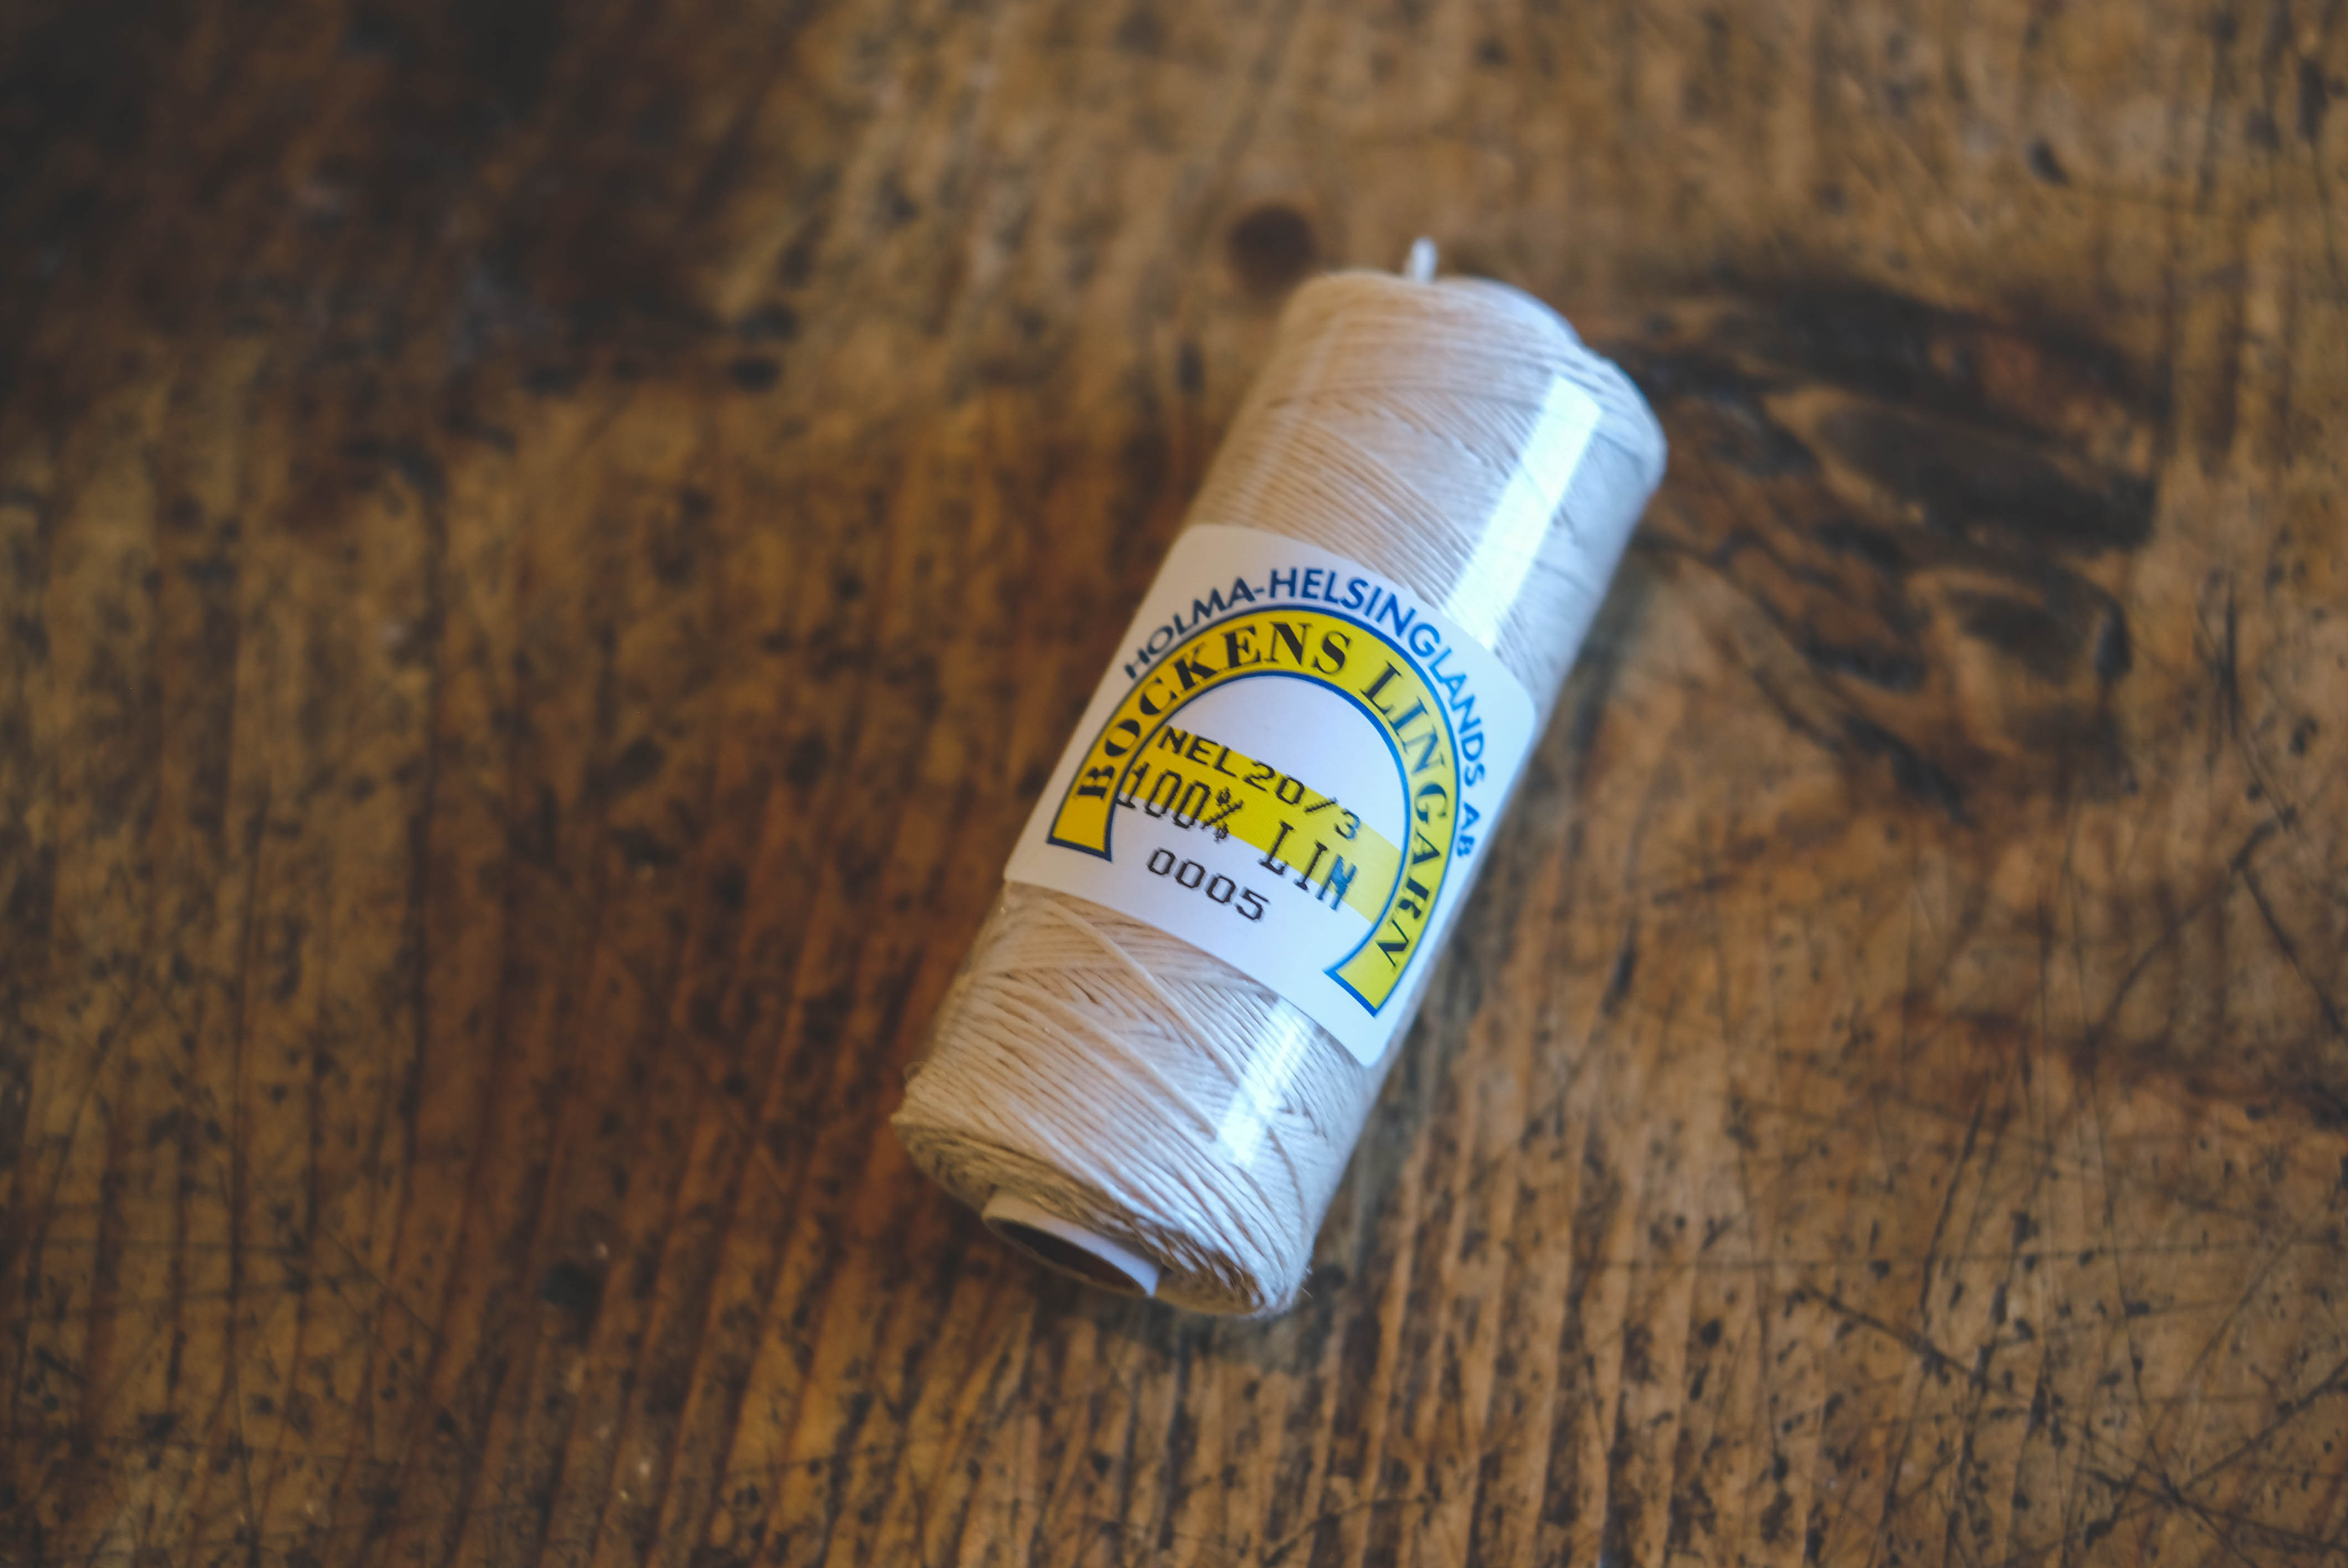 Swedish linen thread 20/3- 1/4 bleached